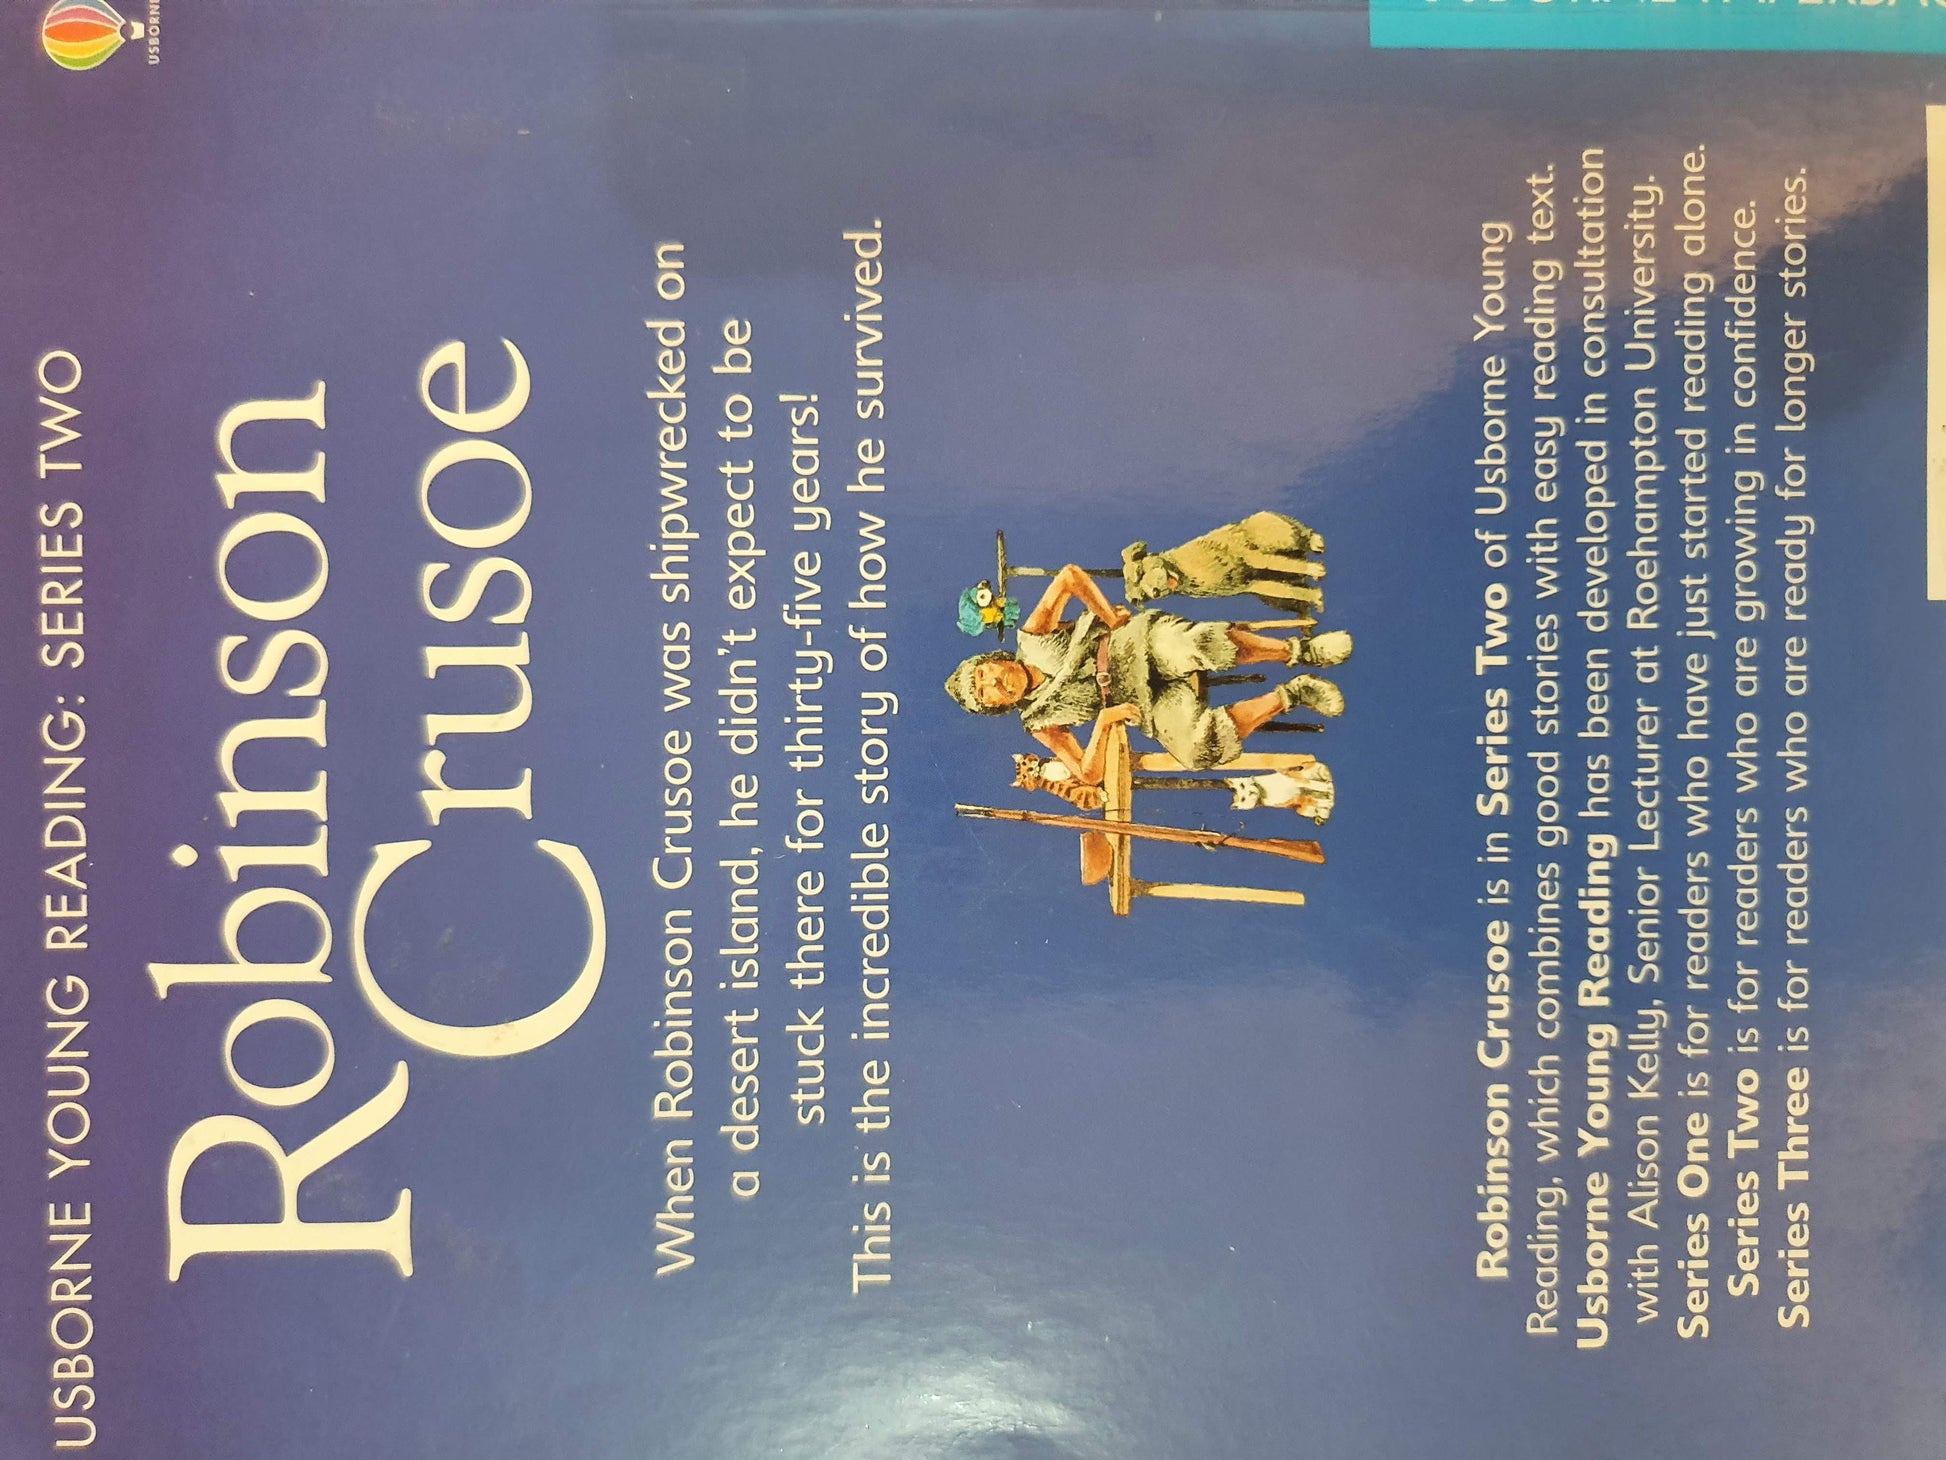 Robinson Crusoe Like New Usborne  (4621818691639)